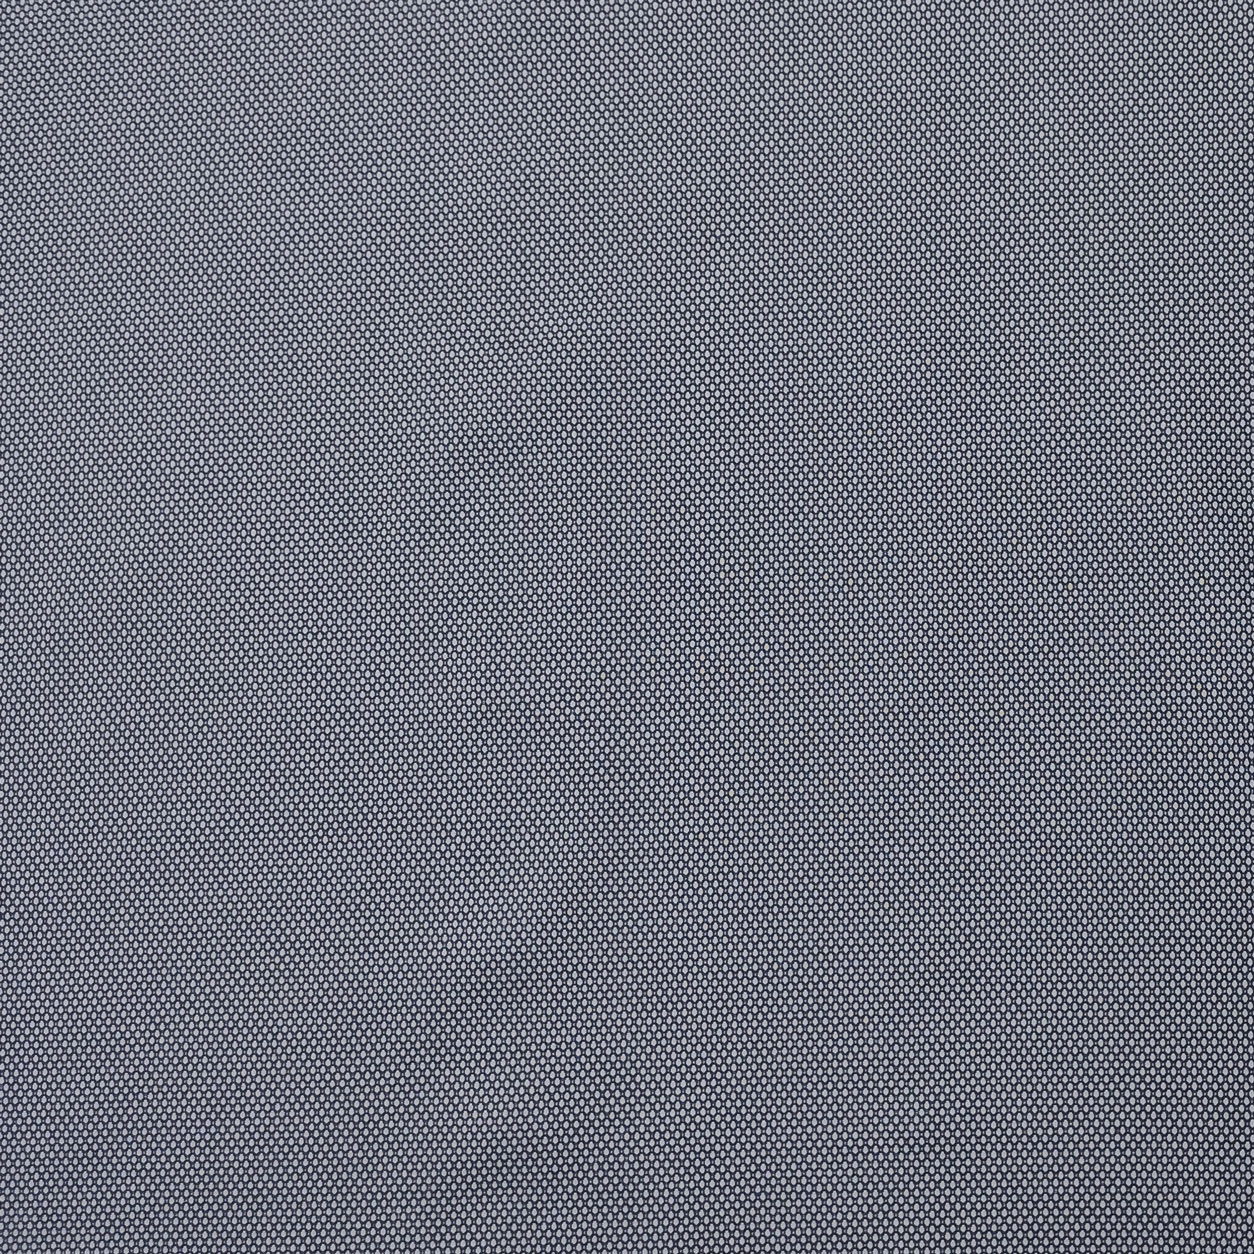 cotone-tessuto-microfantasia-blu-e-grigio